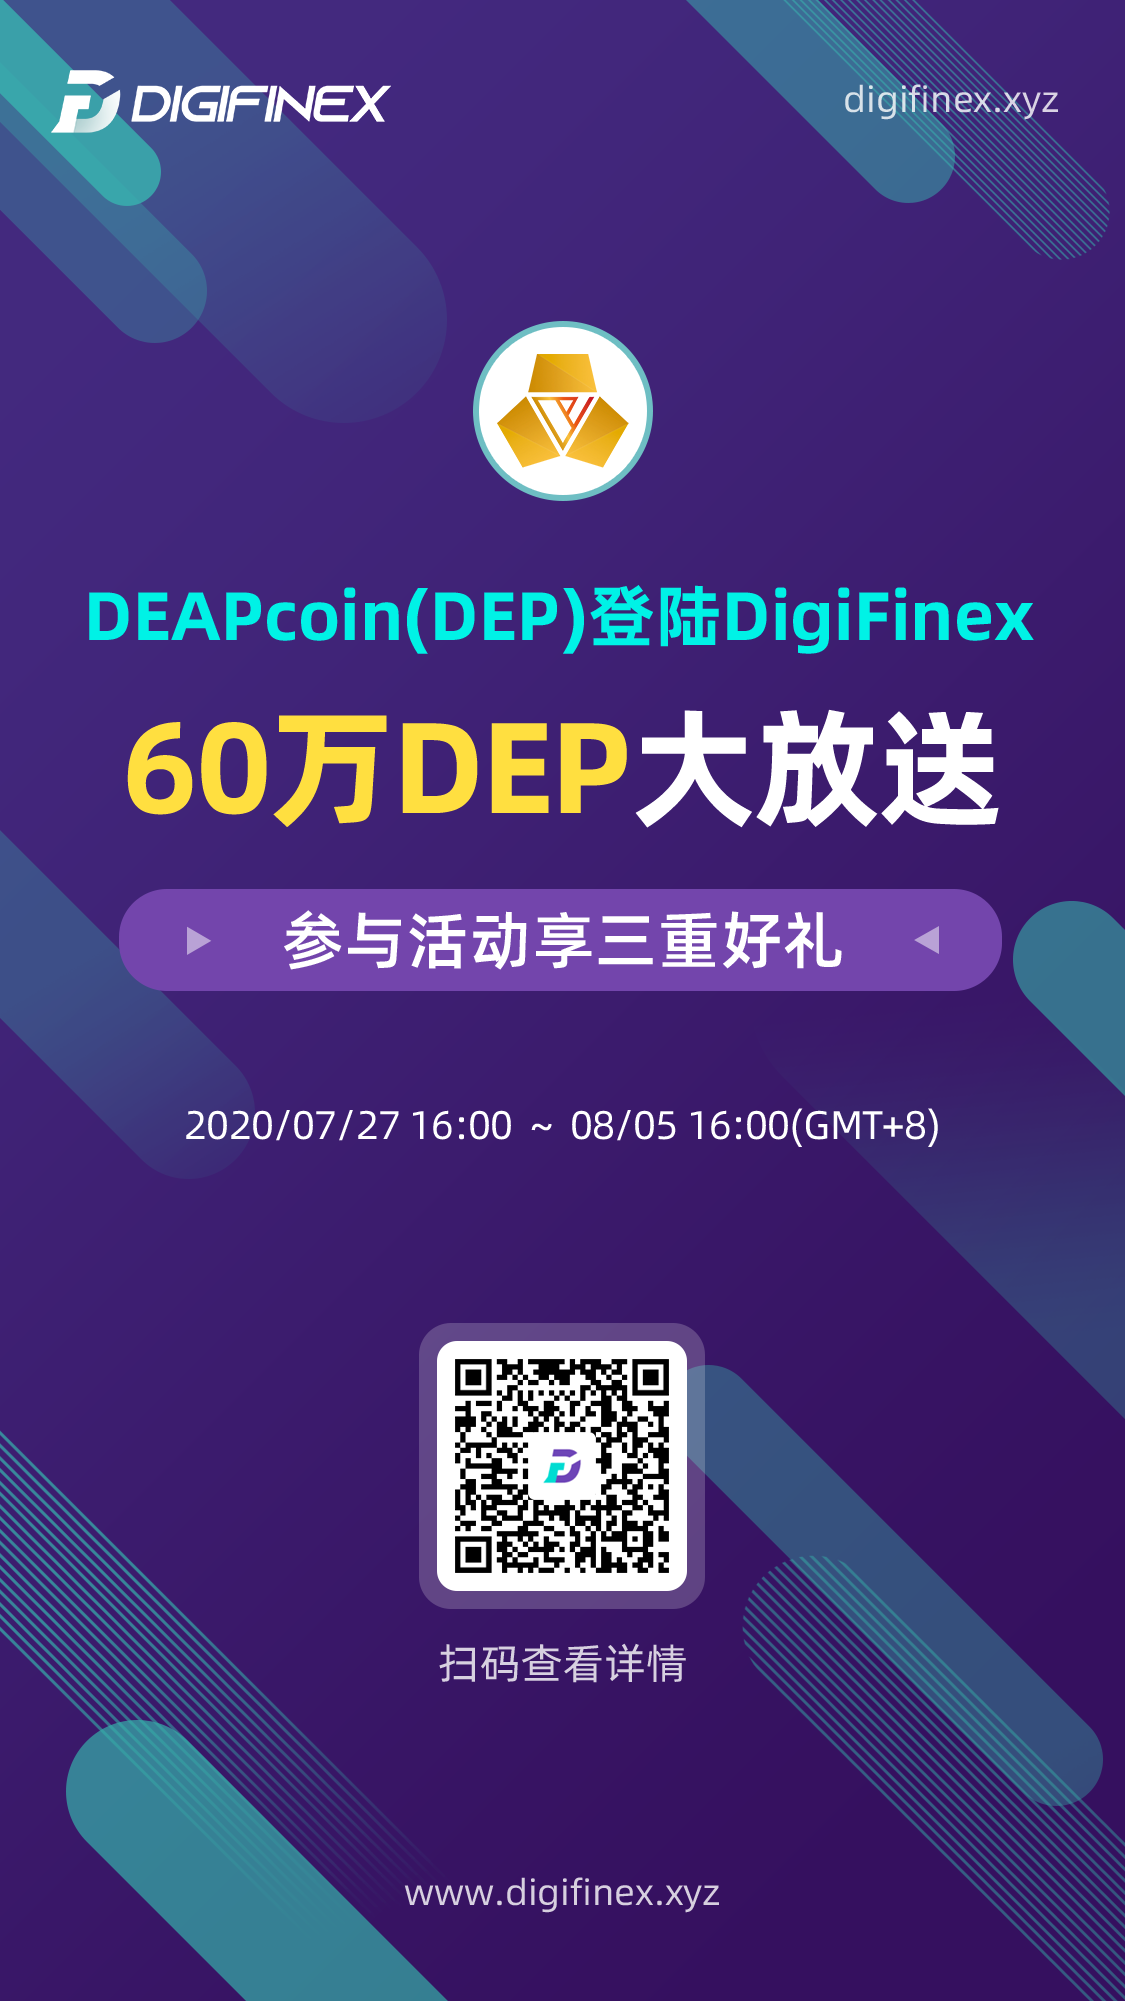 dep_app_poster_en.png